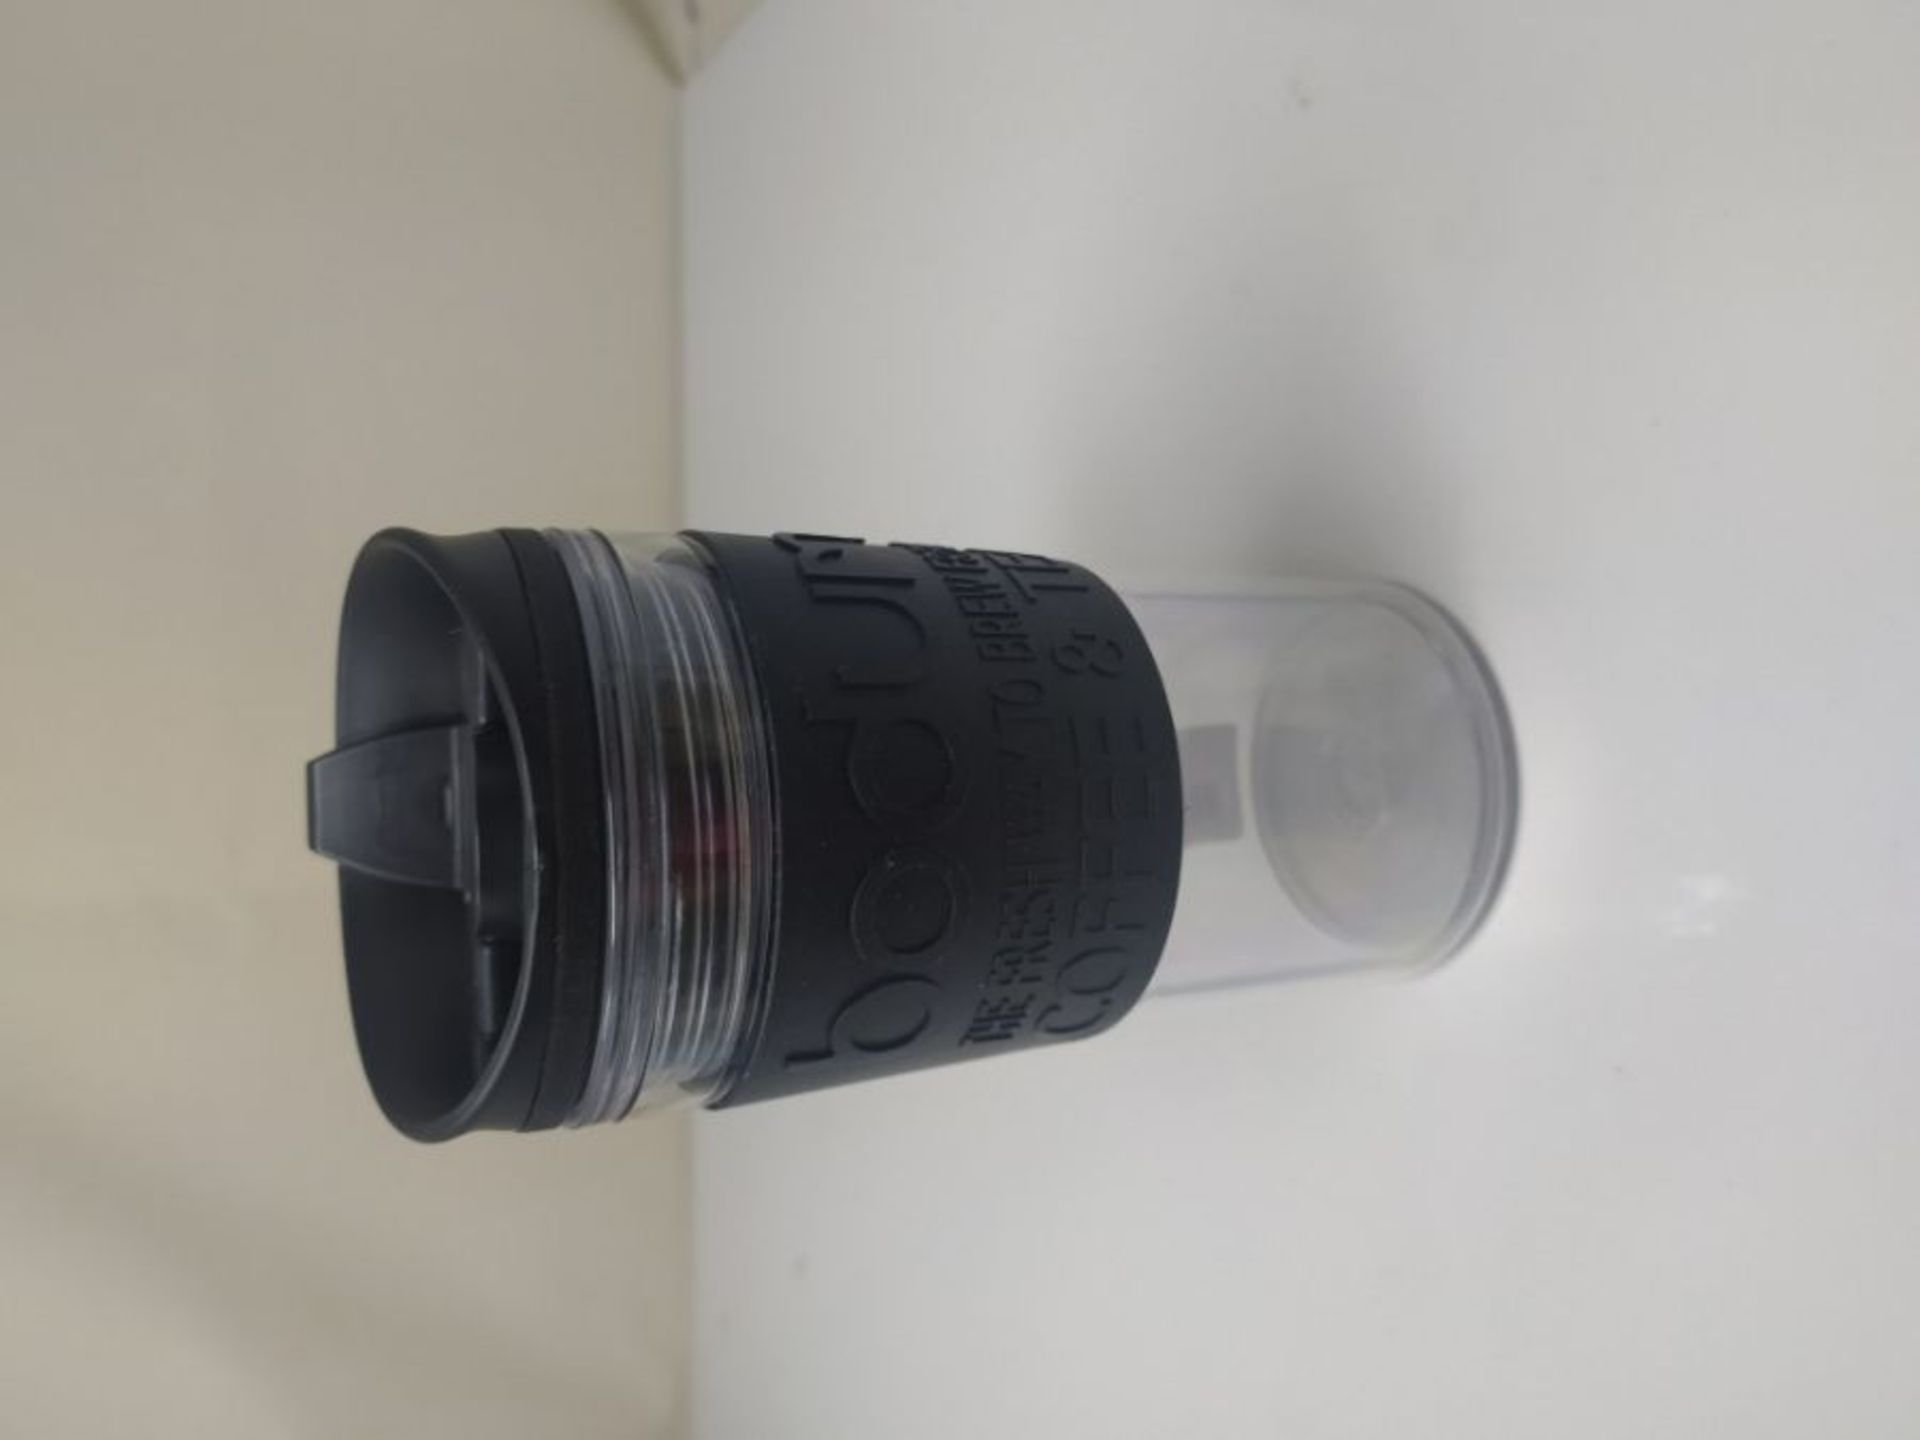 BODUM 11103-01S Travel Mug, Black, 0.35 Litre - Image 2 of 2